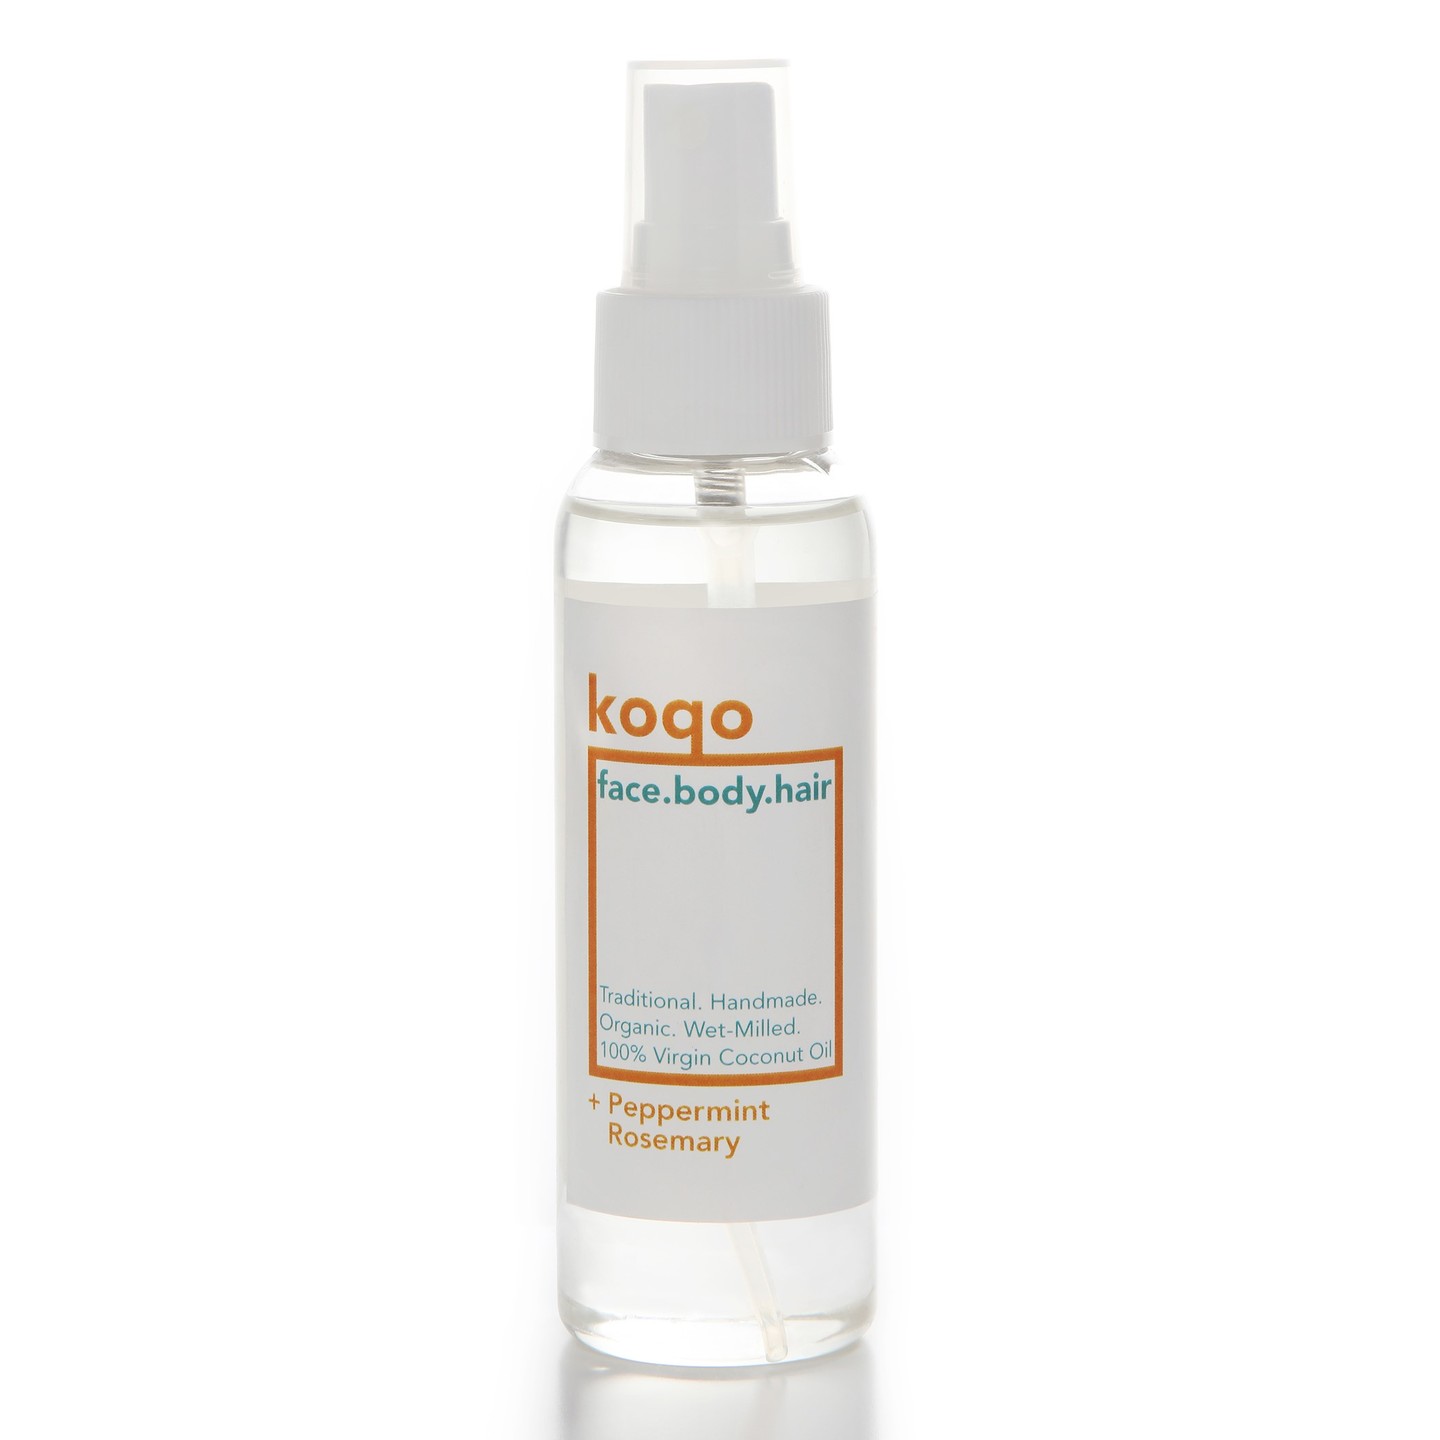 koqo face.body.hair Handmade & Wet-milled Coconut Oil + Peppermint & Rosemary 100ml Spray